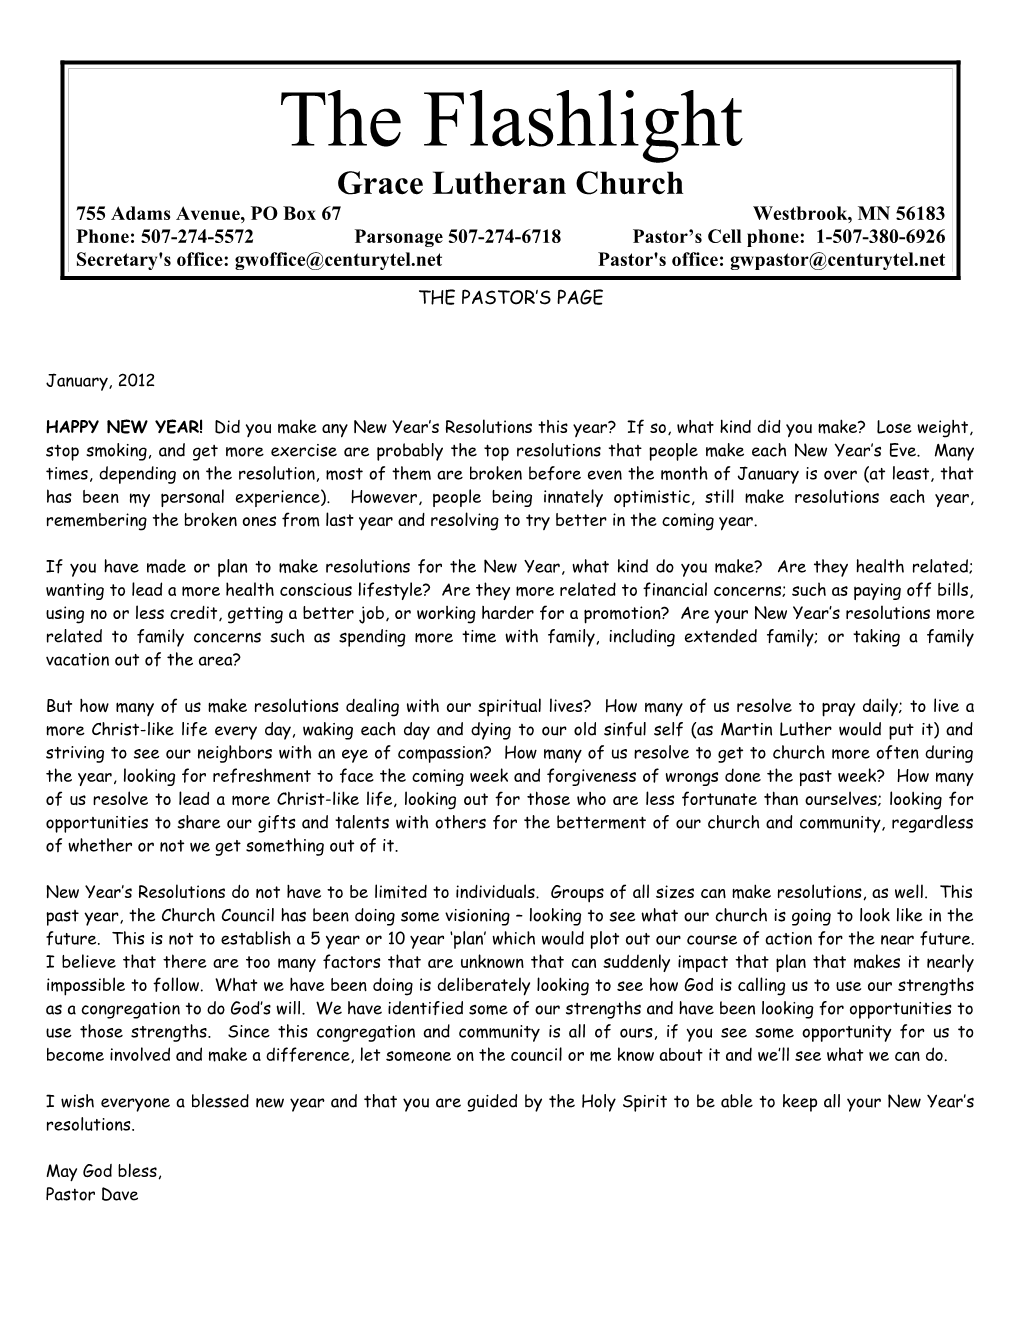 Grace Lutheran Church s1